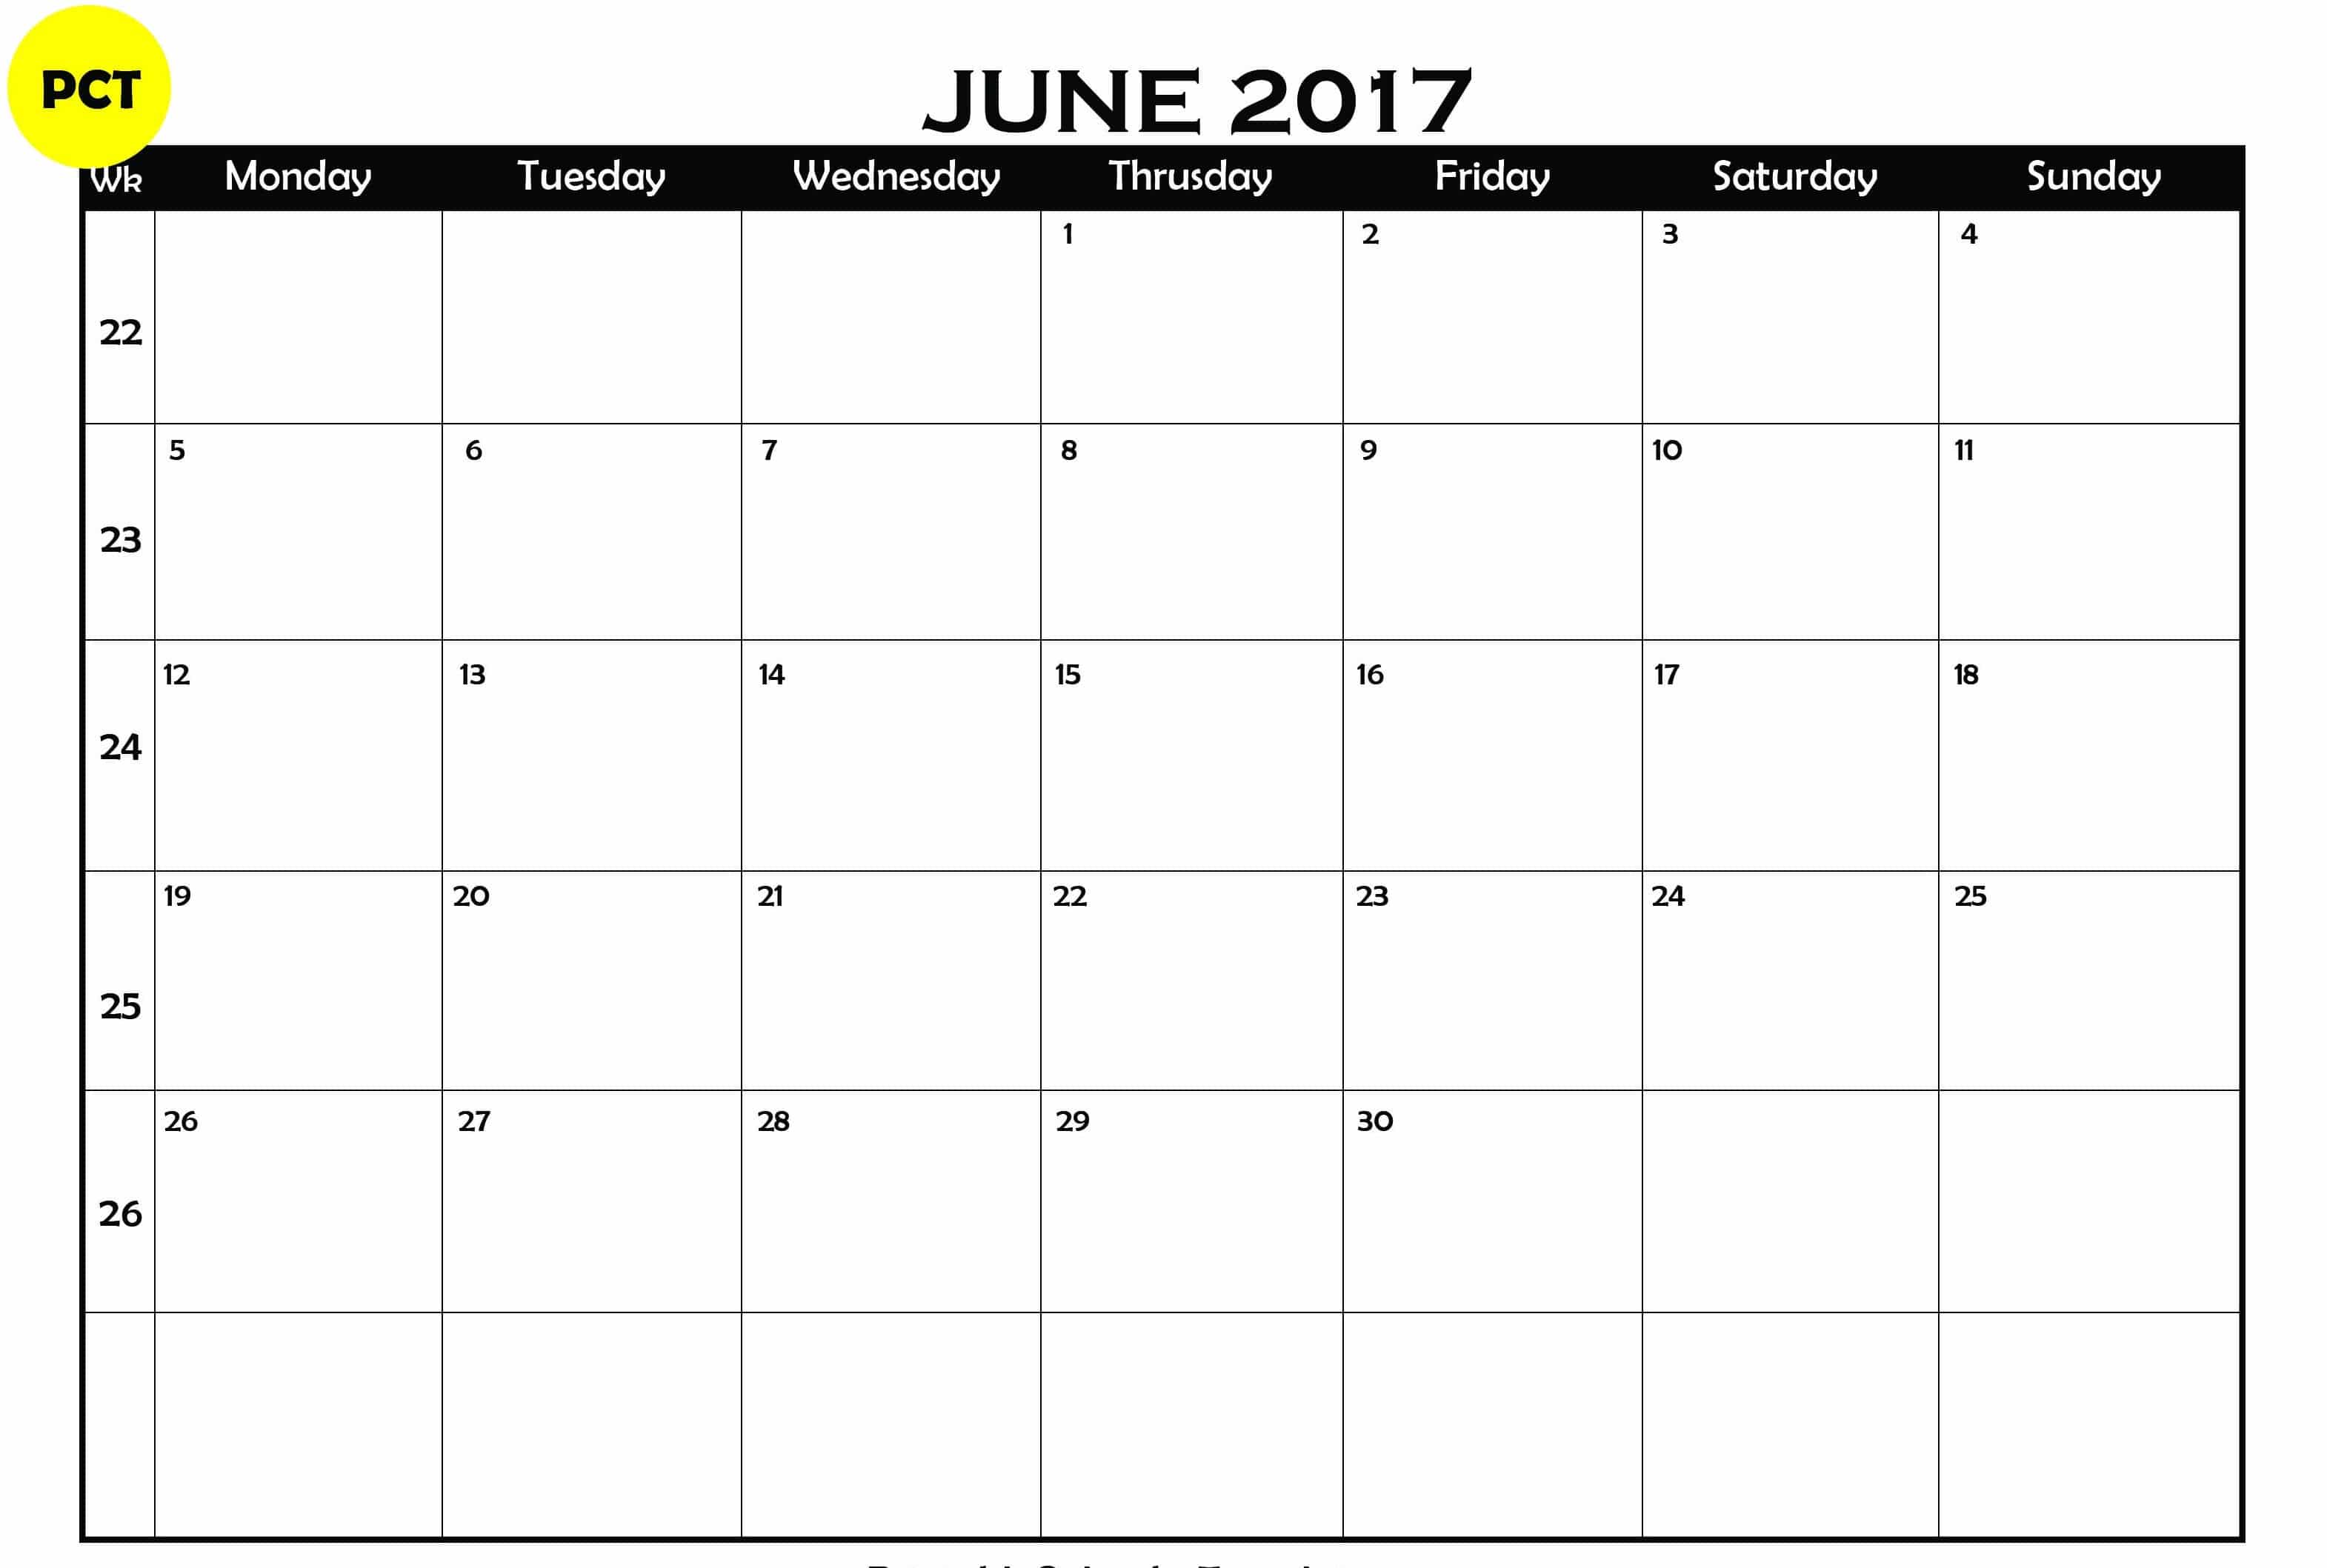 online-june-2017-calendar-images-printable-templates-oppidan-library